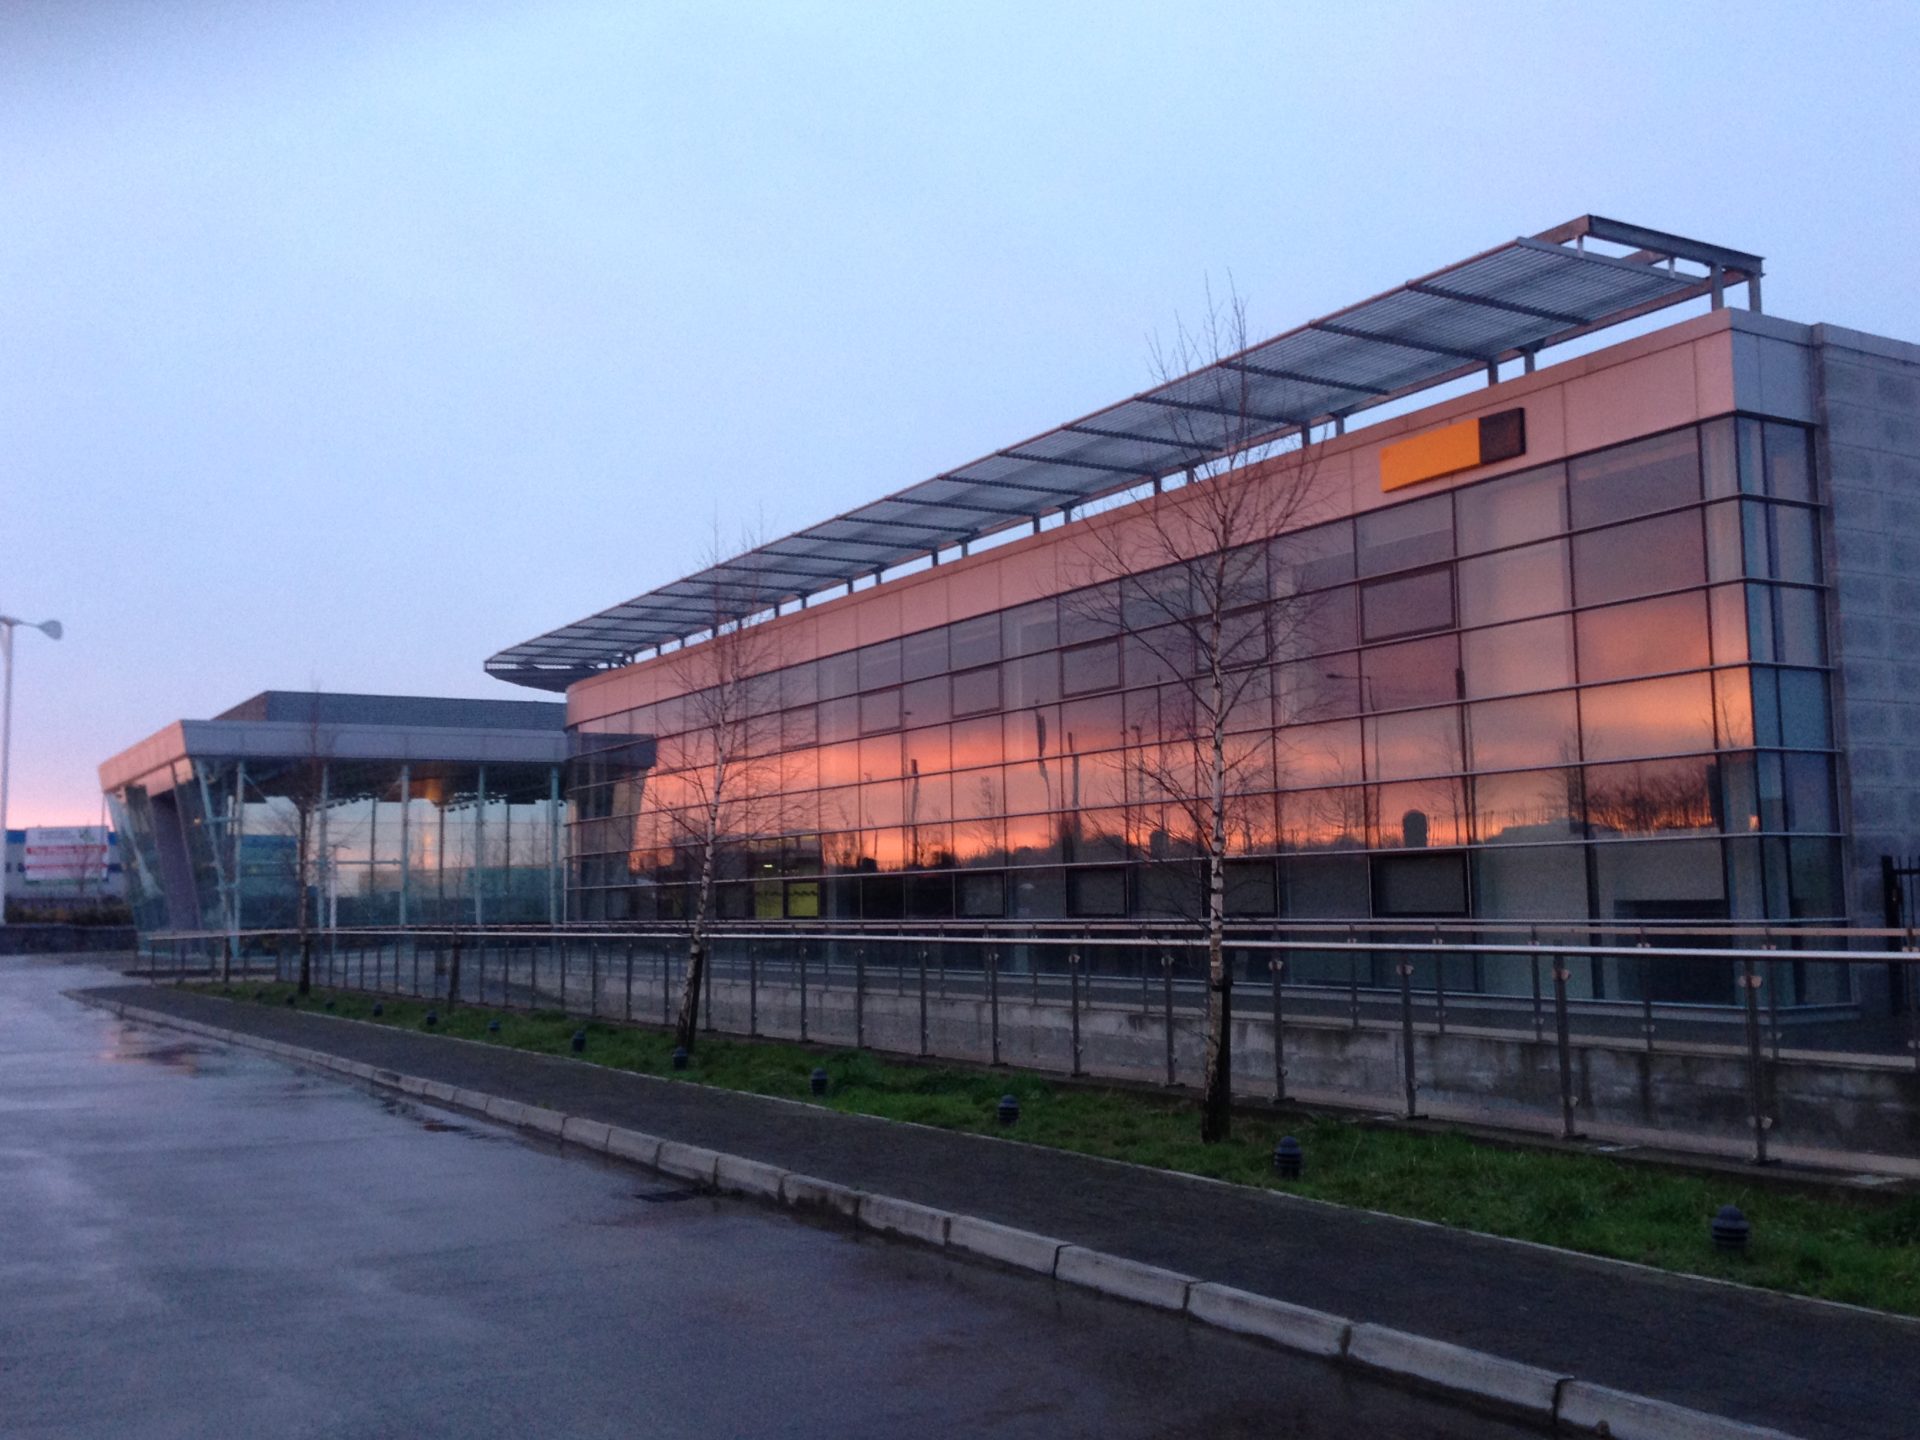 Finning's new facility in Dublin